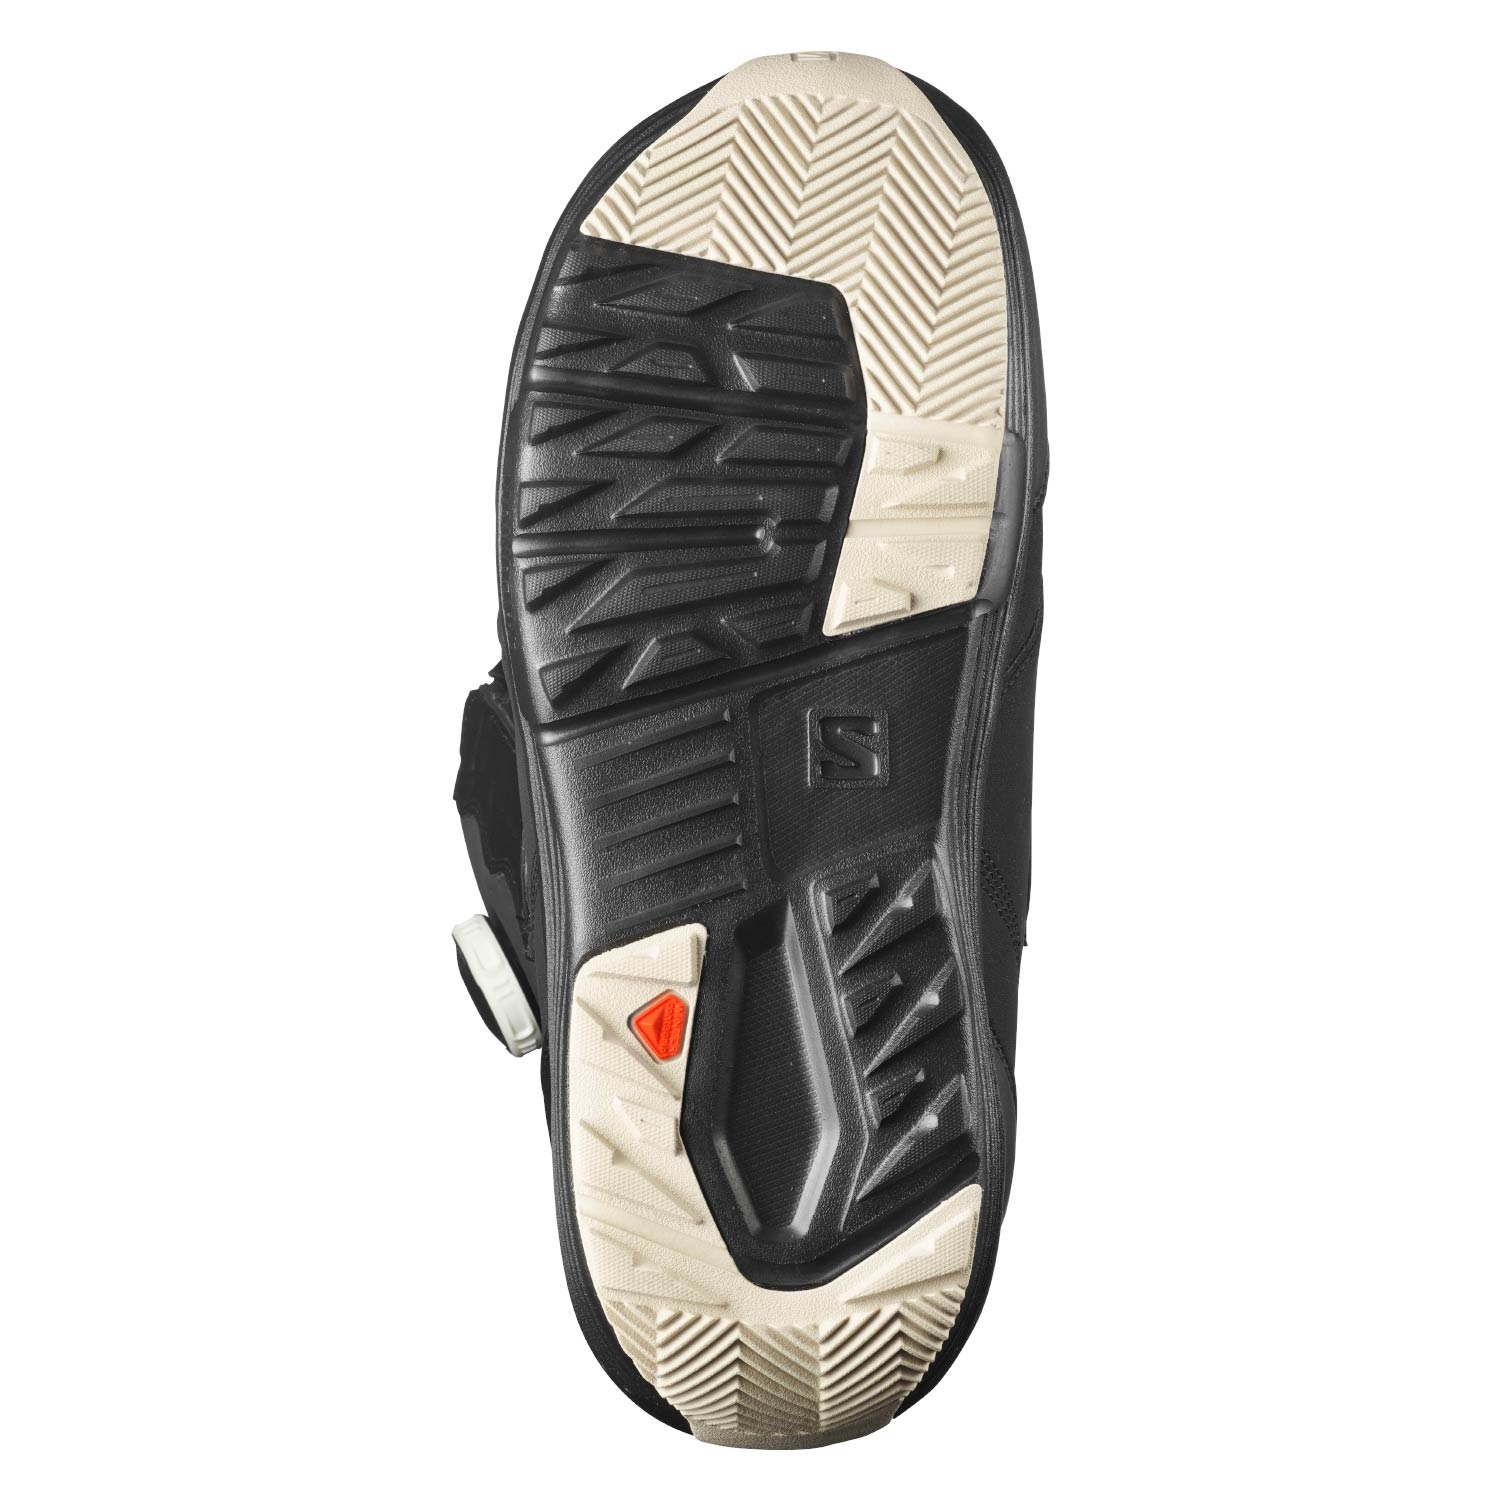 Salomon Ivy Str8Jkt Boa Snowboard Boots Black 2021